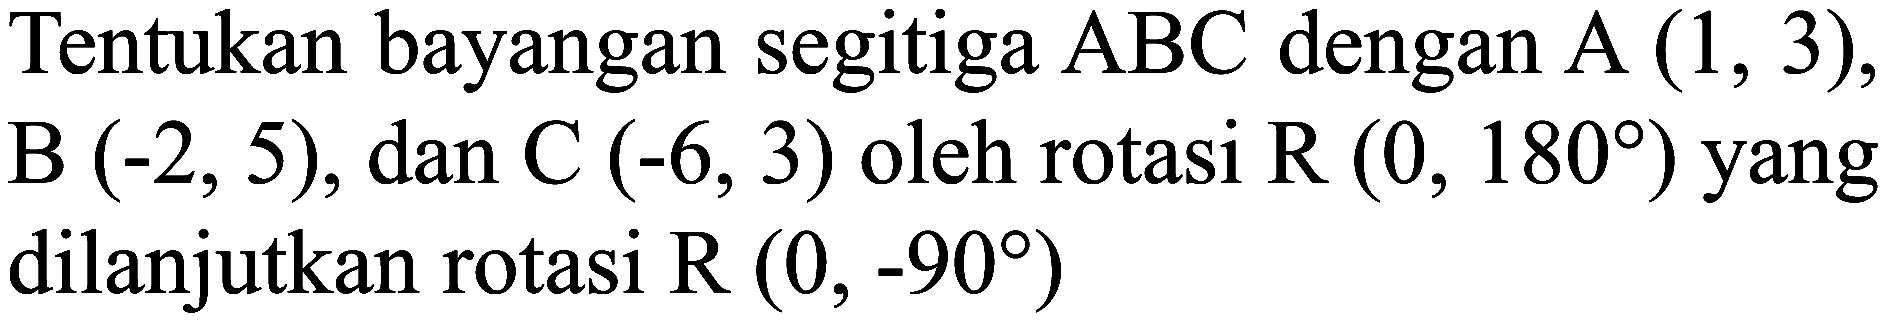 Tentukan bayangan segitiga  ABC  dengan  A(1,3) ,  B(-2,5) , dan  C(-6,3)  oleh rotasi  R(0,180)  yang dilanjutkan rotasi  R(0,-90)